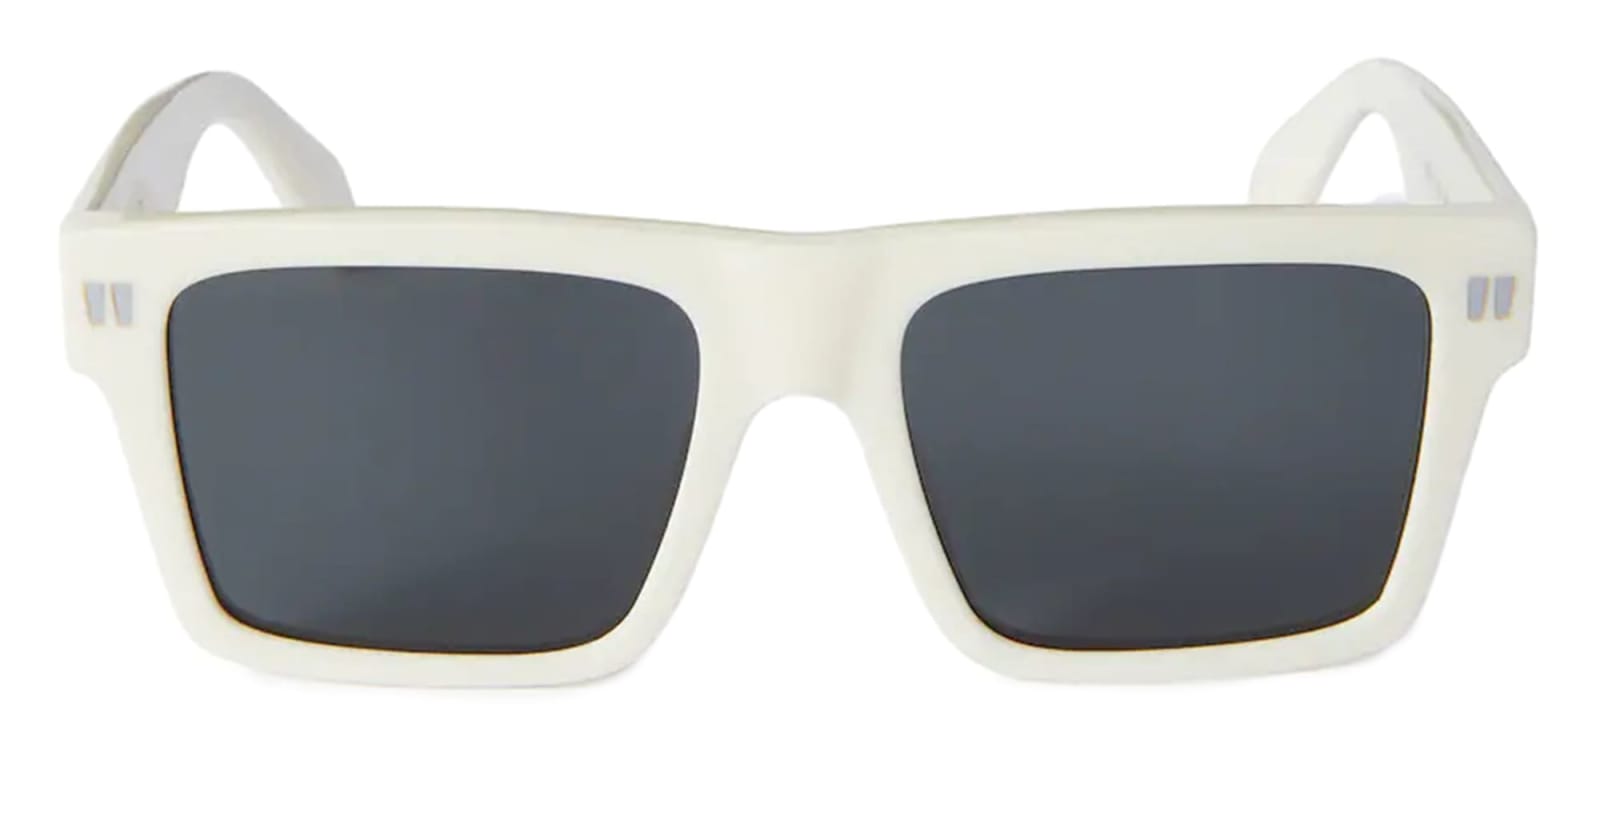 Off-white Lawton - White / Dark Grey Sunglasses